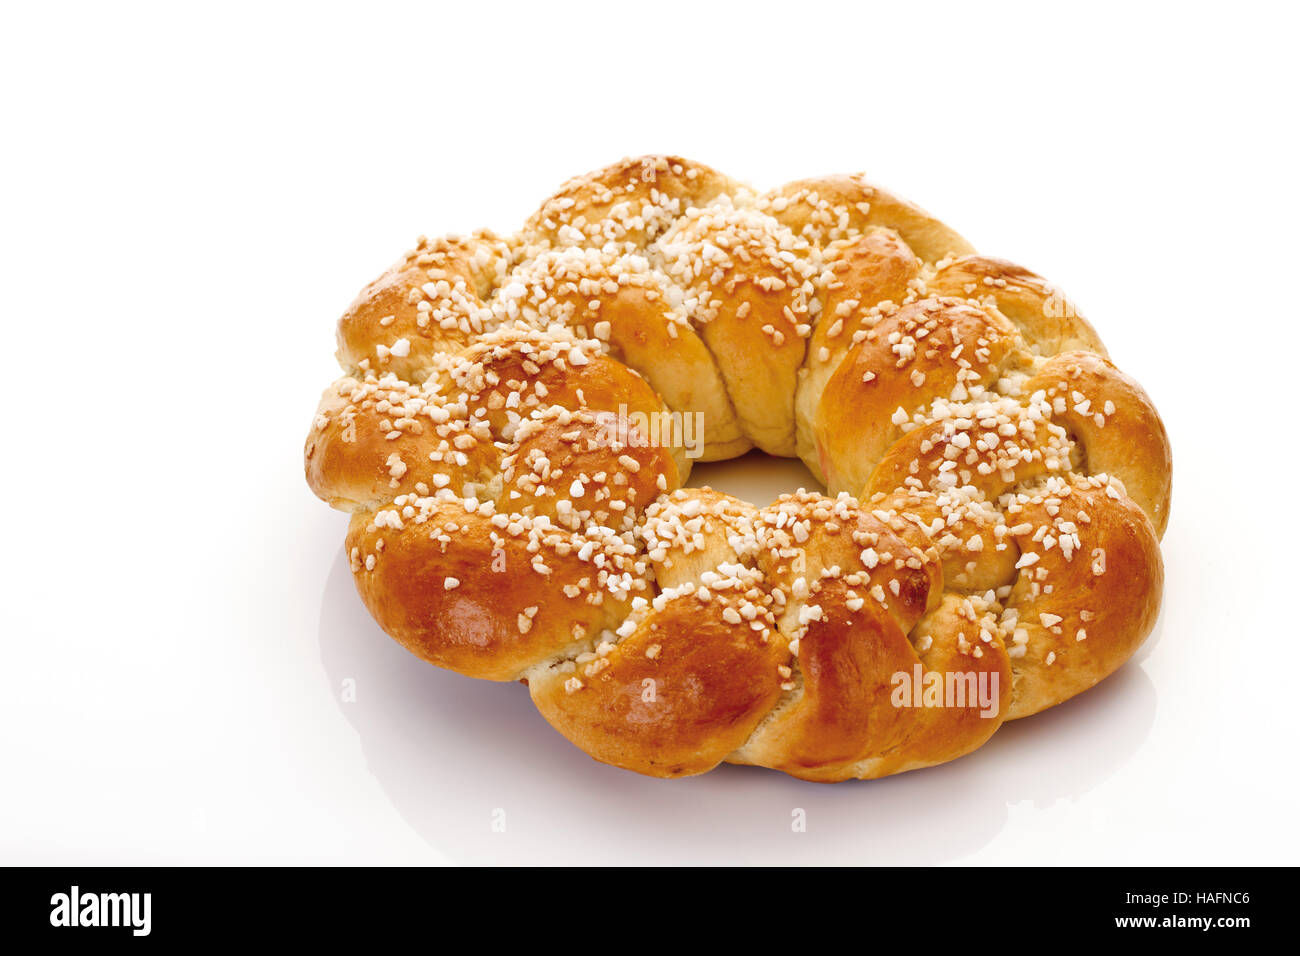 Hefekranz, German pastry Stock Photo